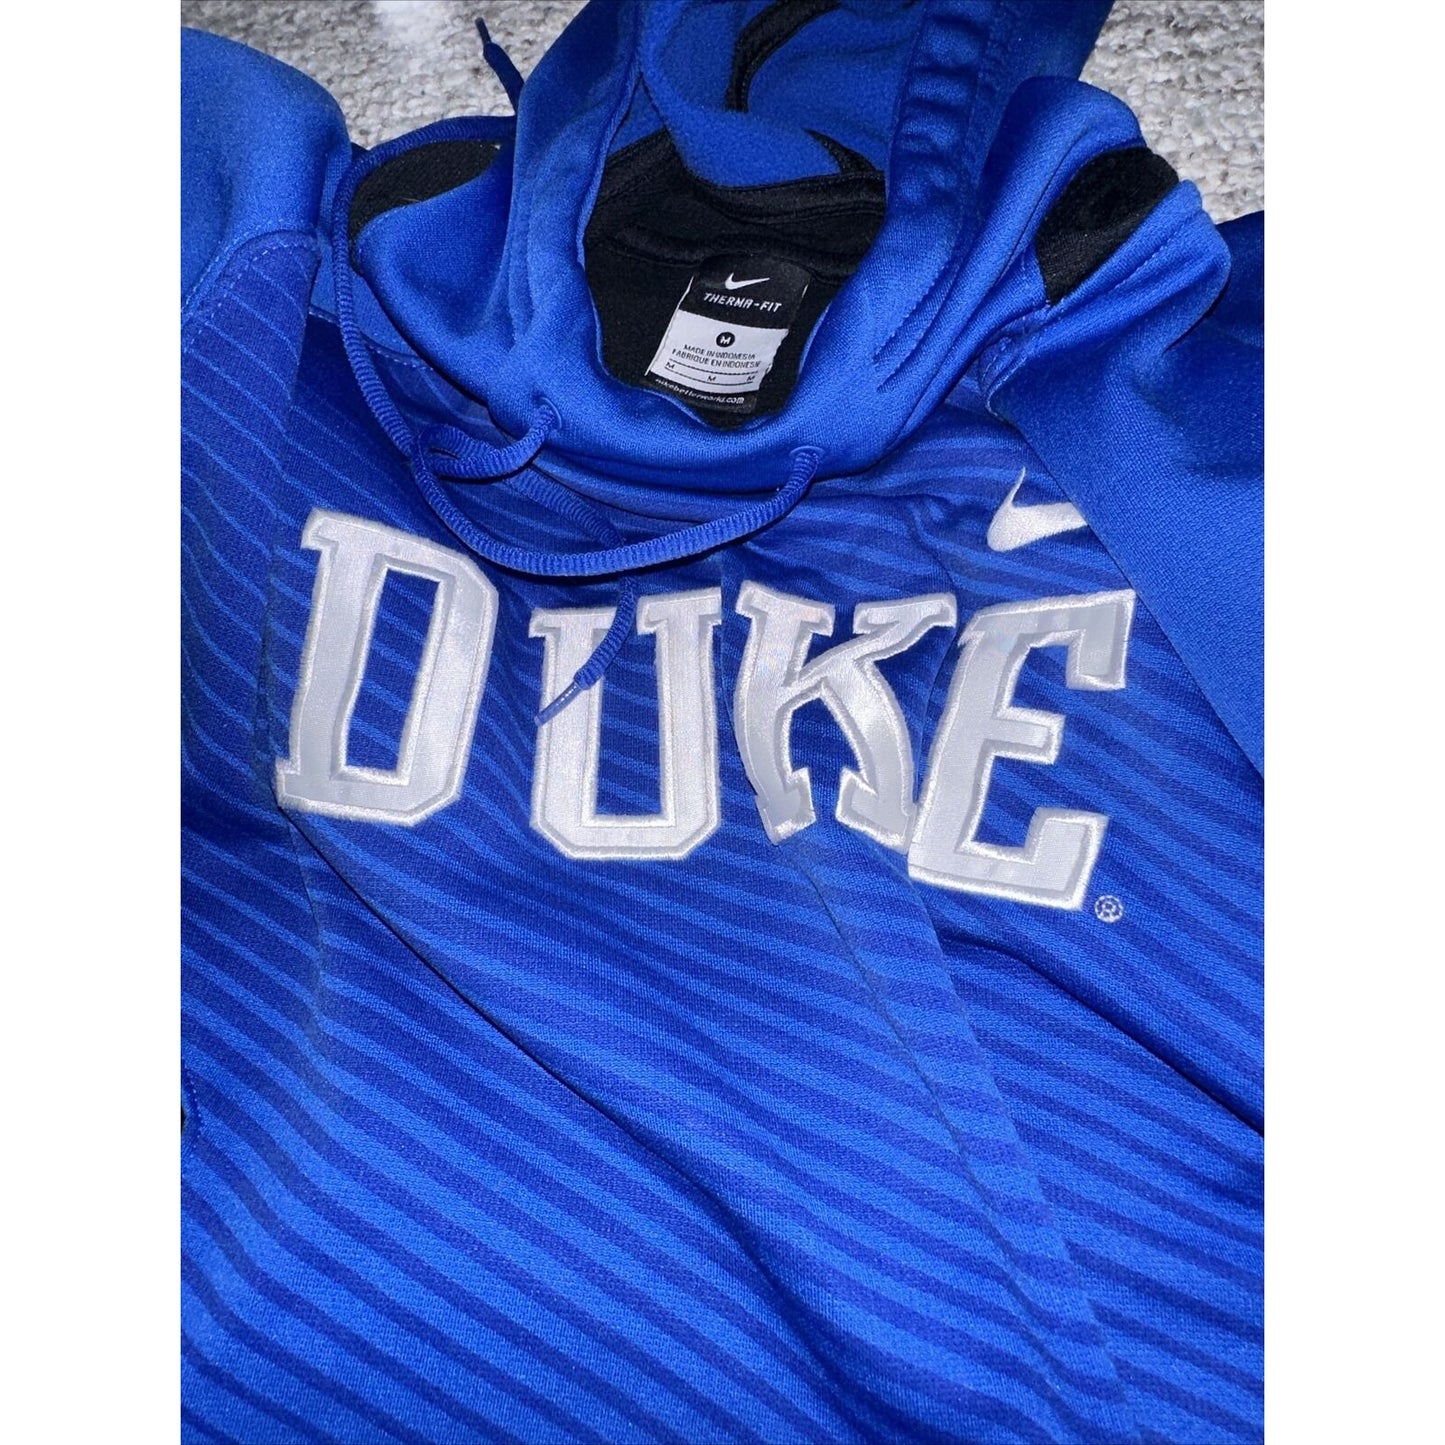 Men’s Blue Medium Nike Therma-fit Hoodie Duke